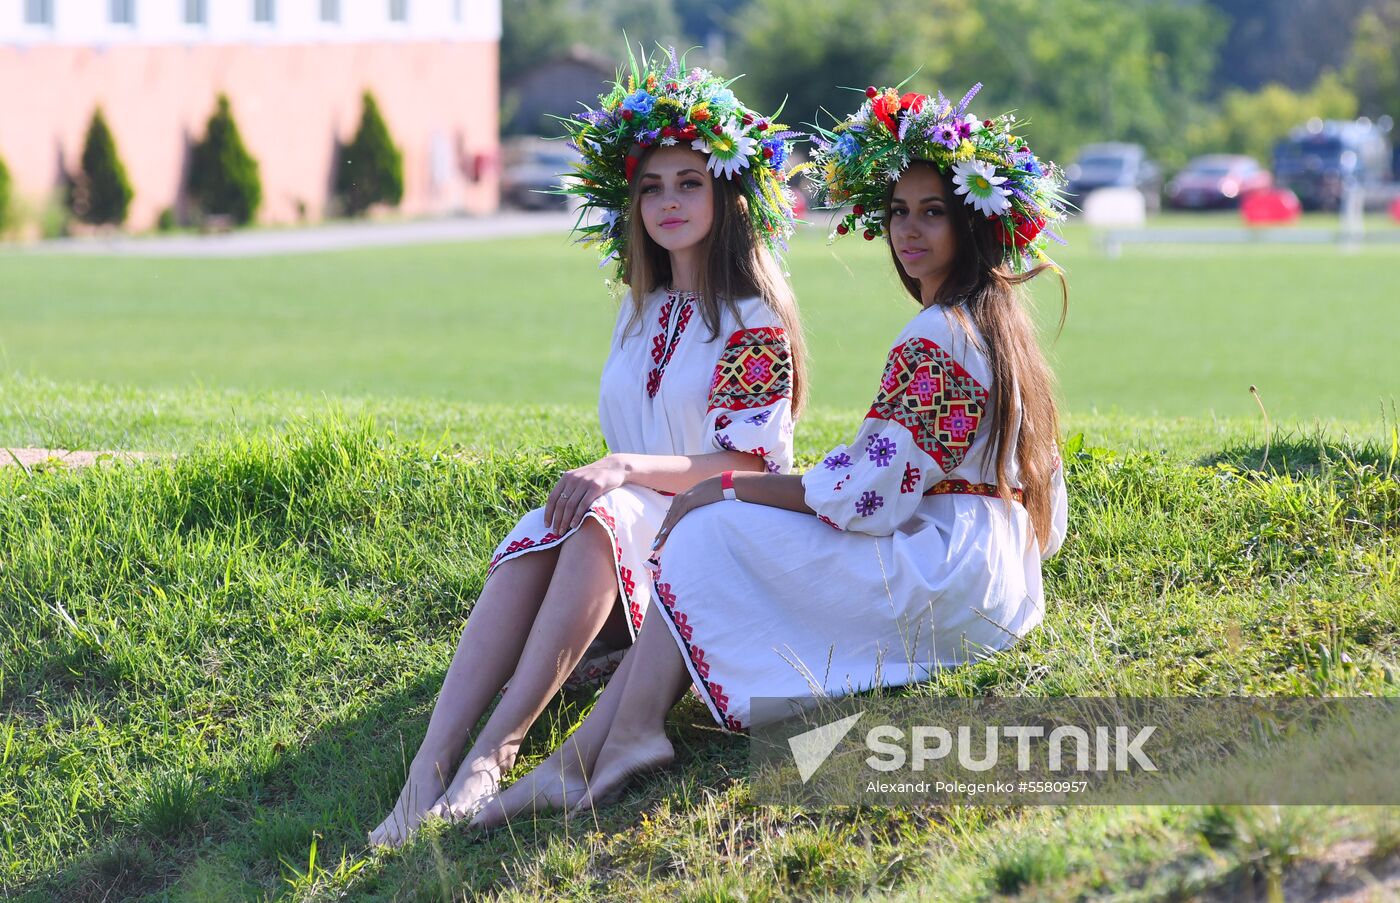 Ivan Kupala celebration in Ukraine